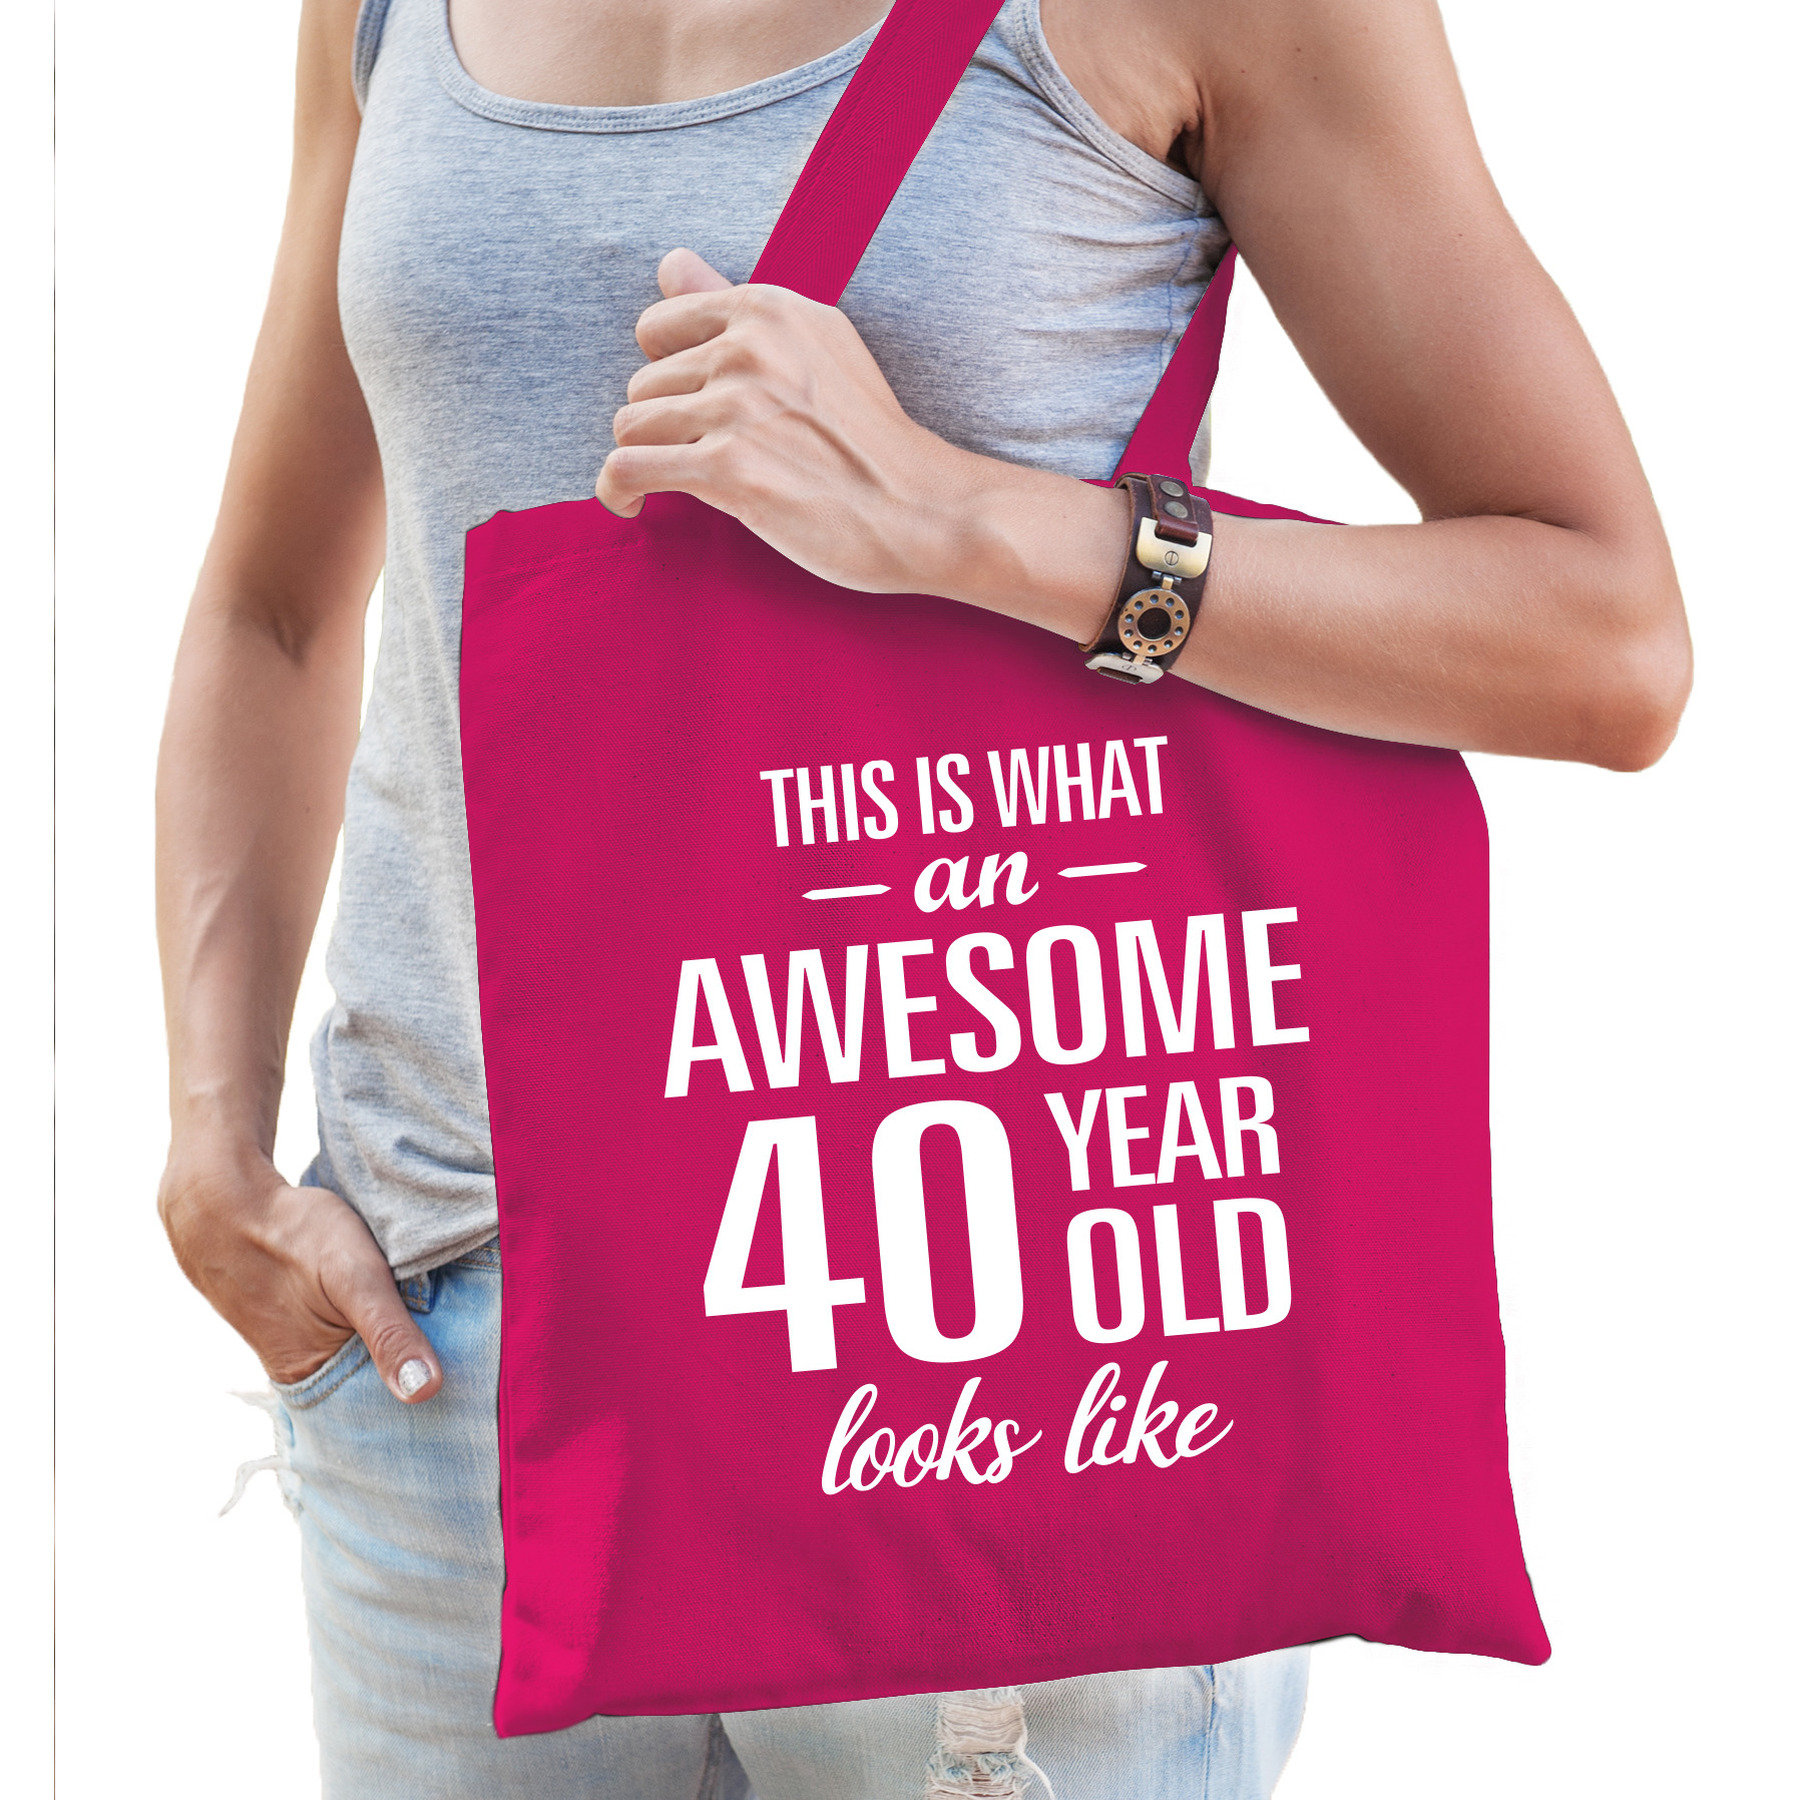 Awesome 40 year / geweldig 40 jaar cadeau tas roze voor dames